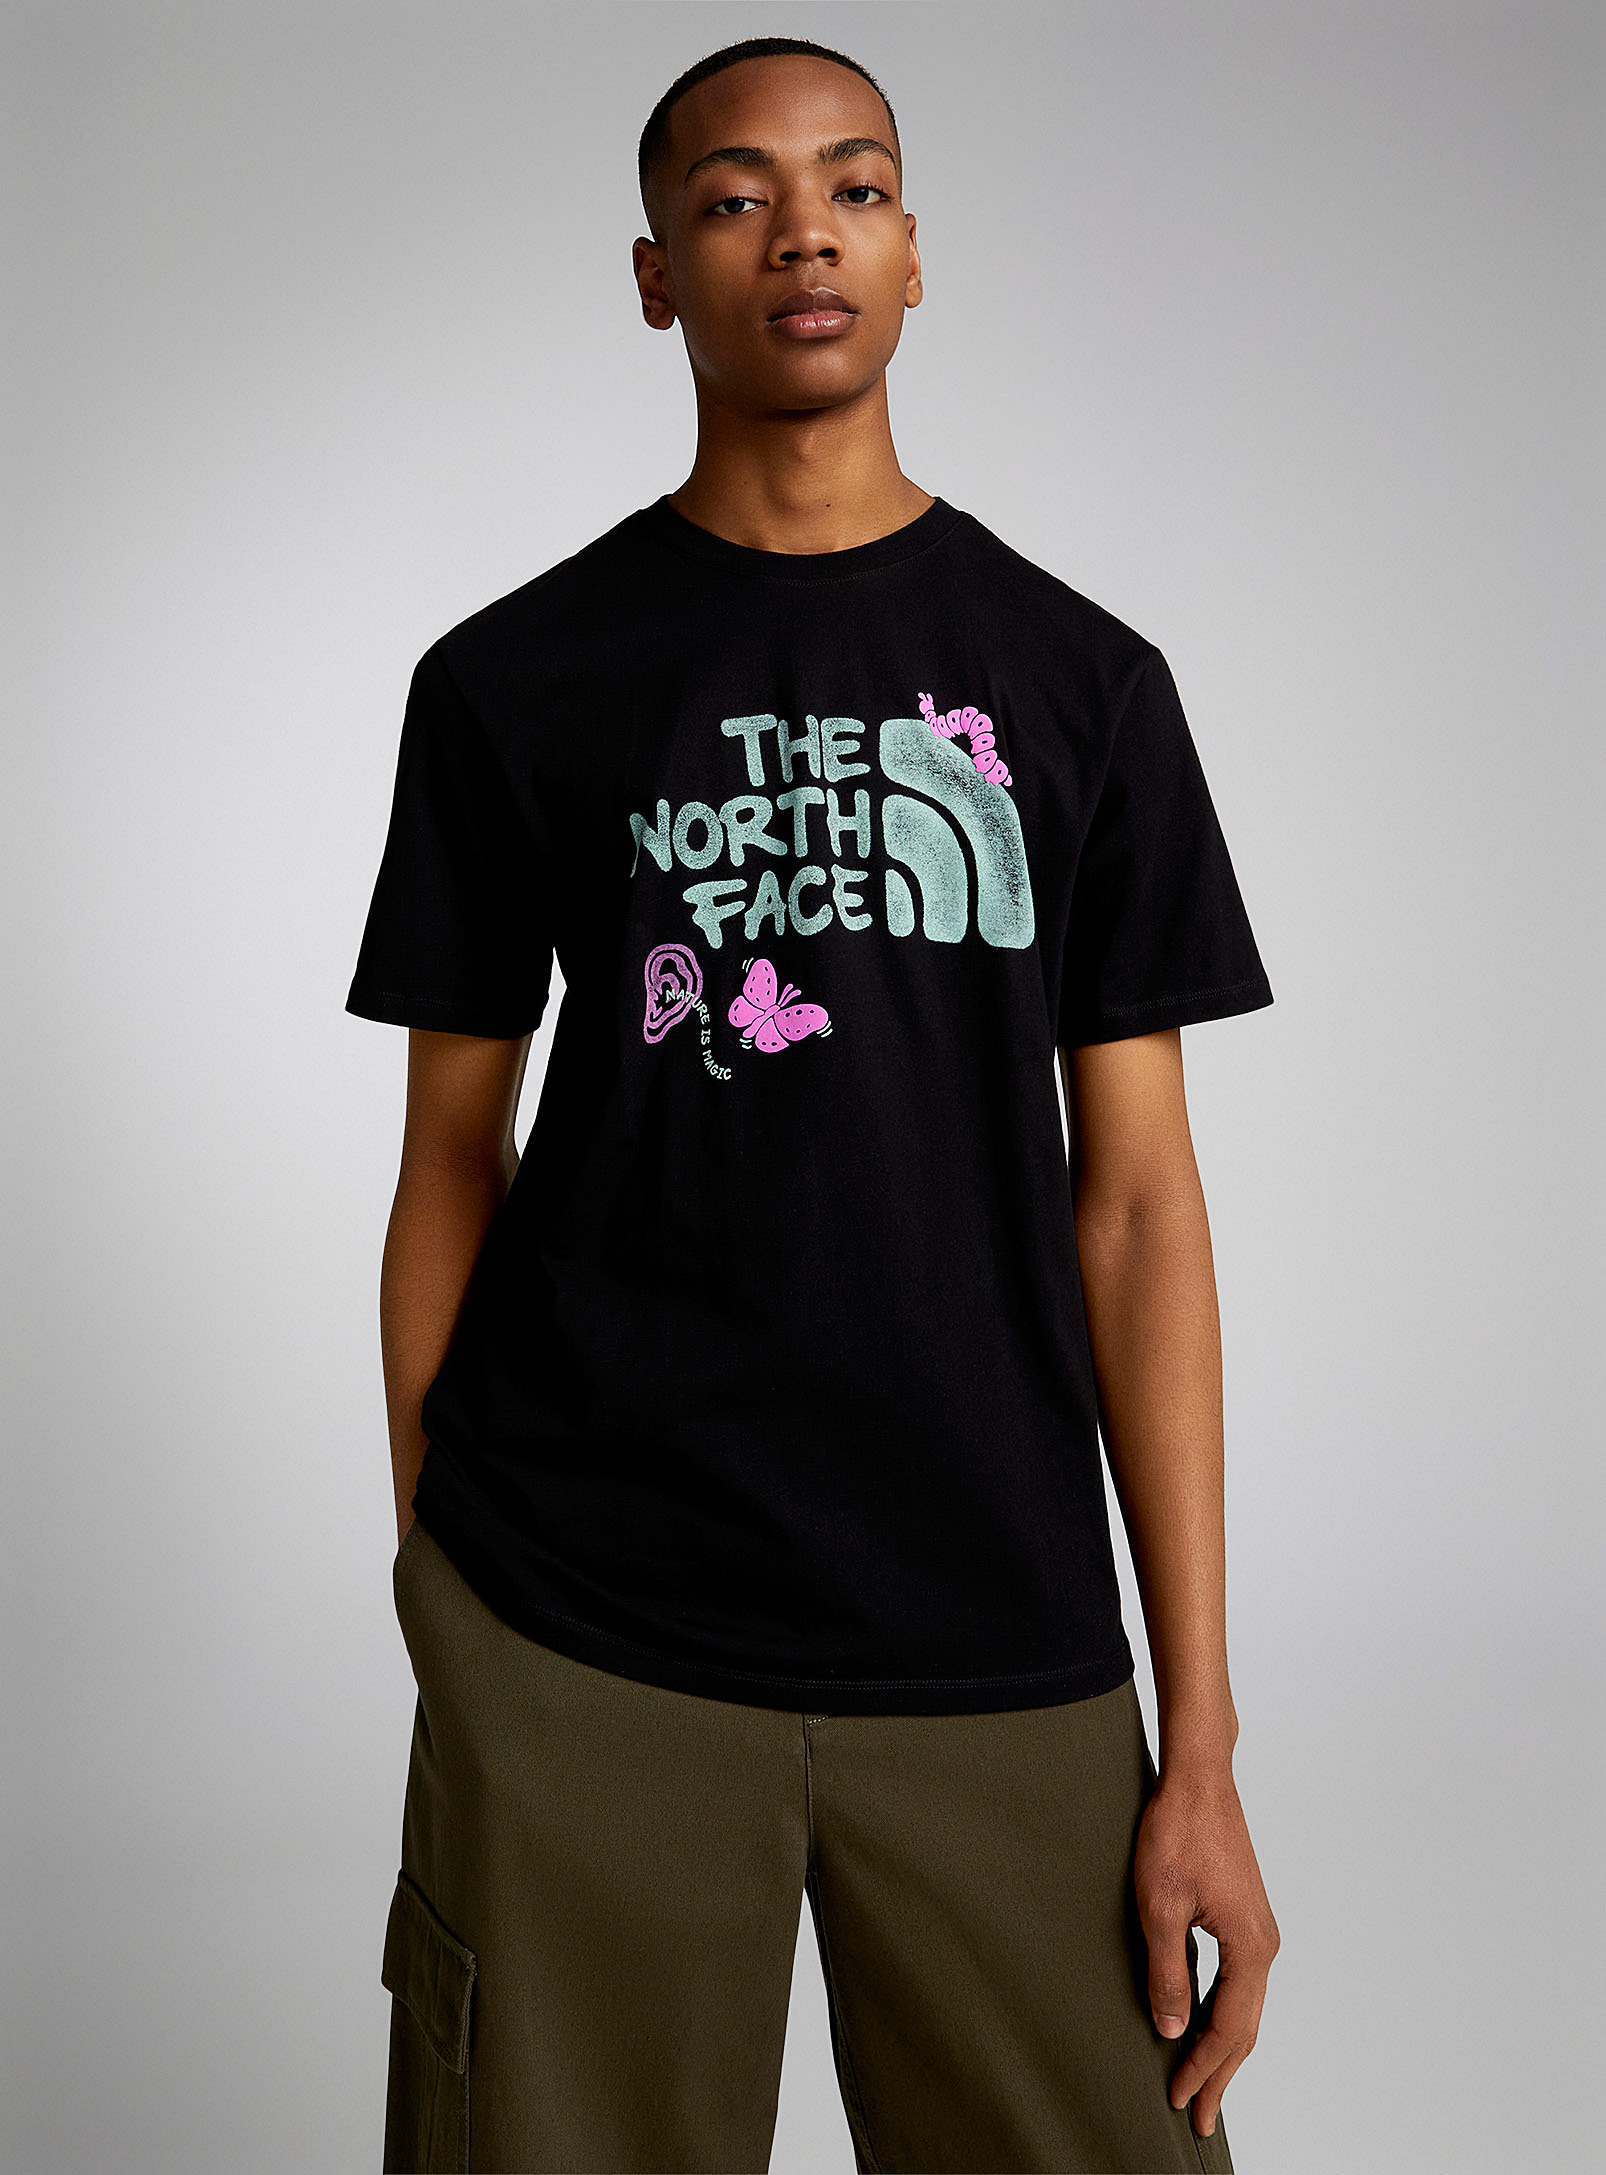 The North Face - Men's Magic nature T-shirt